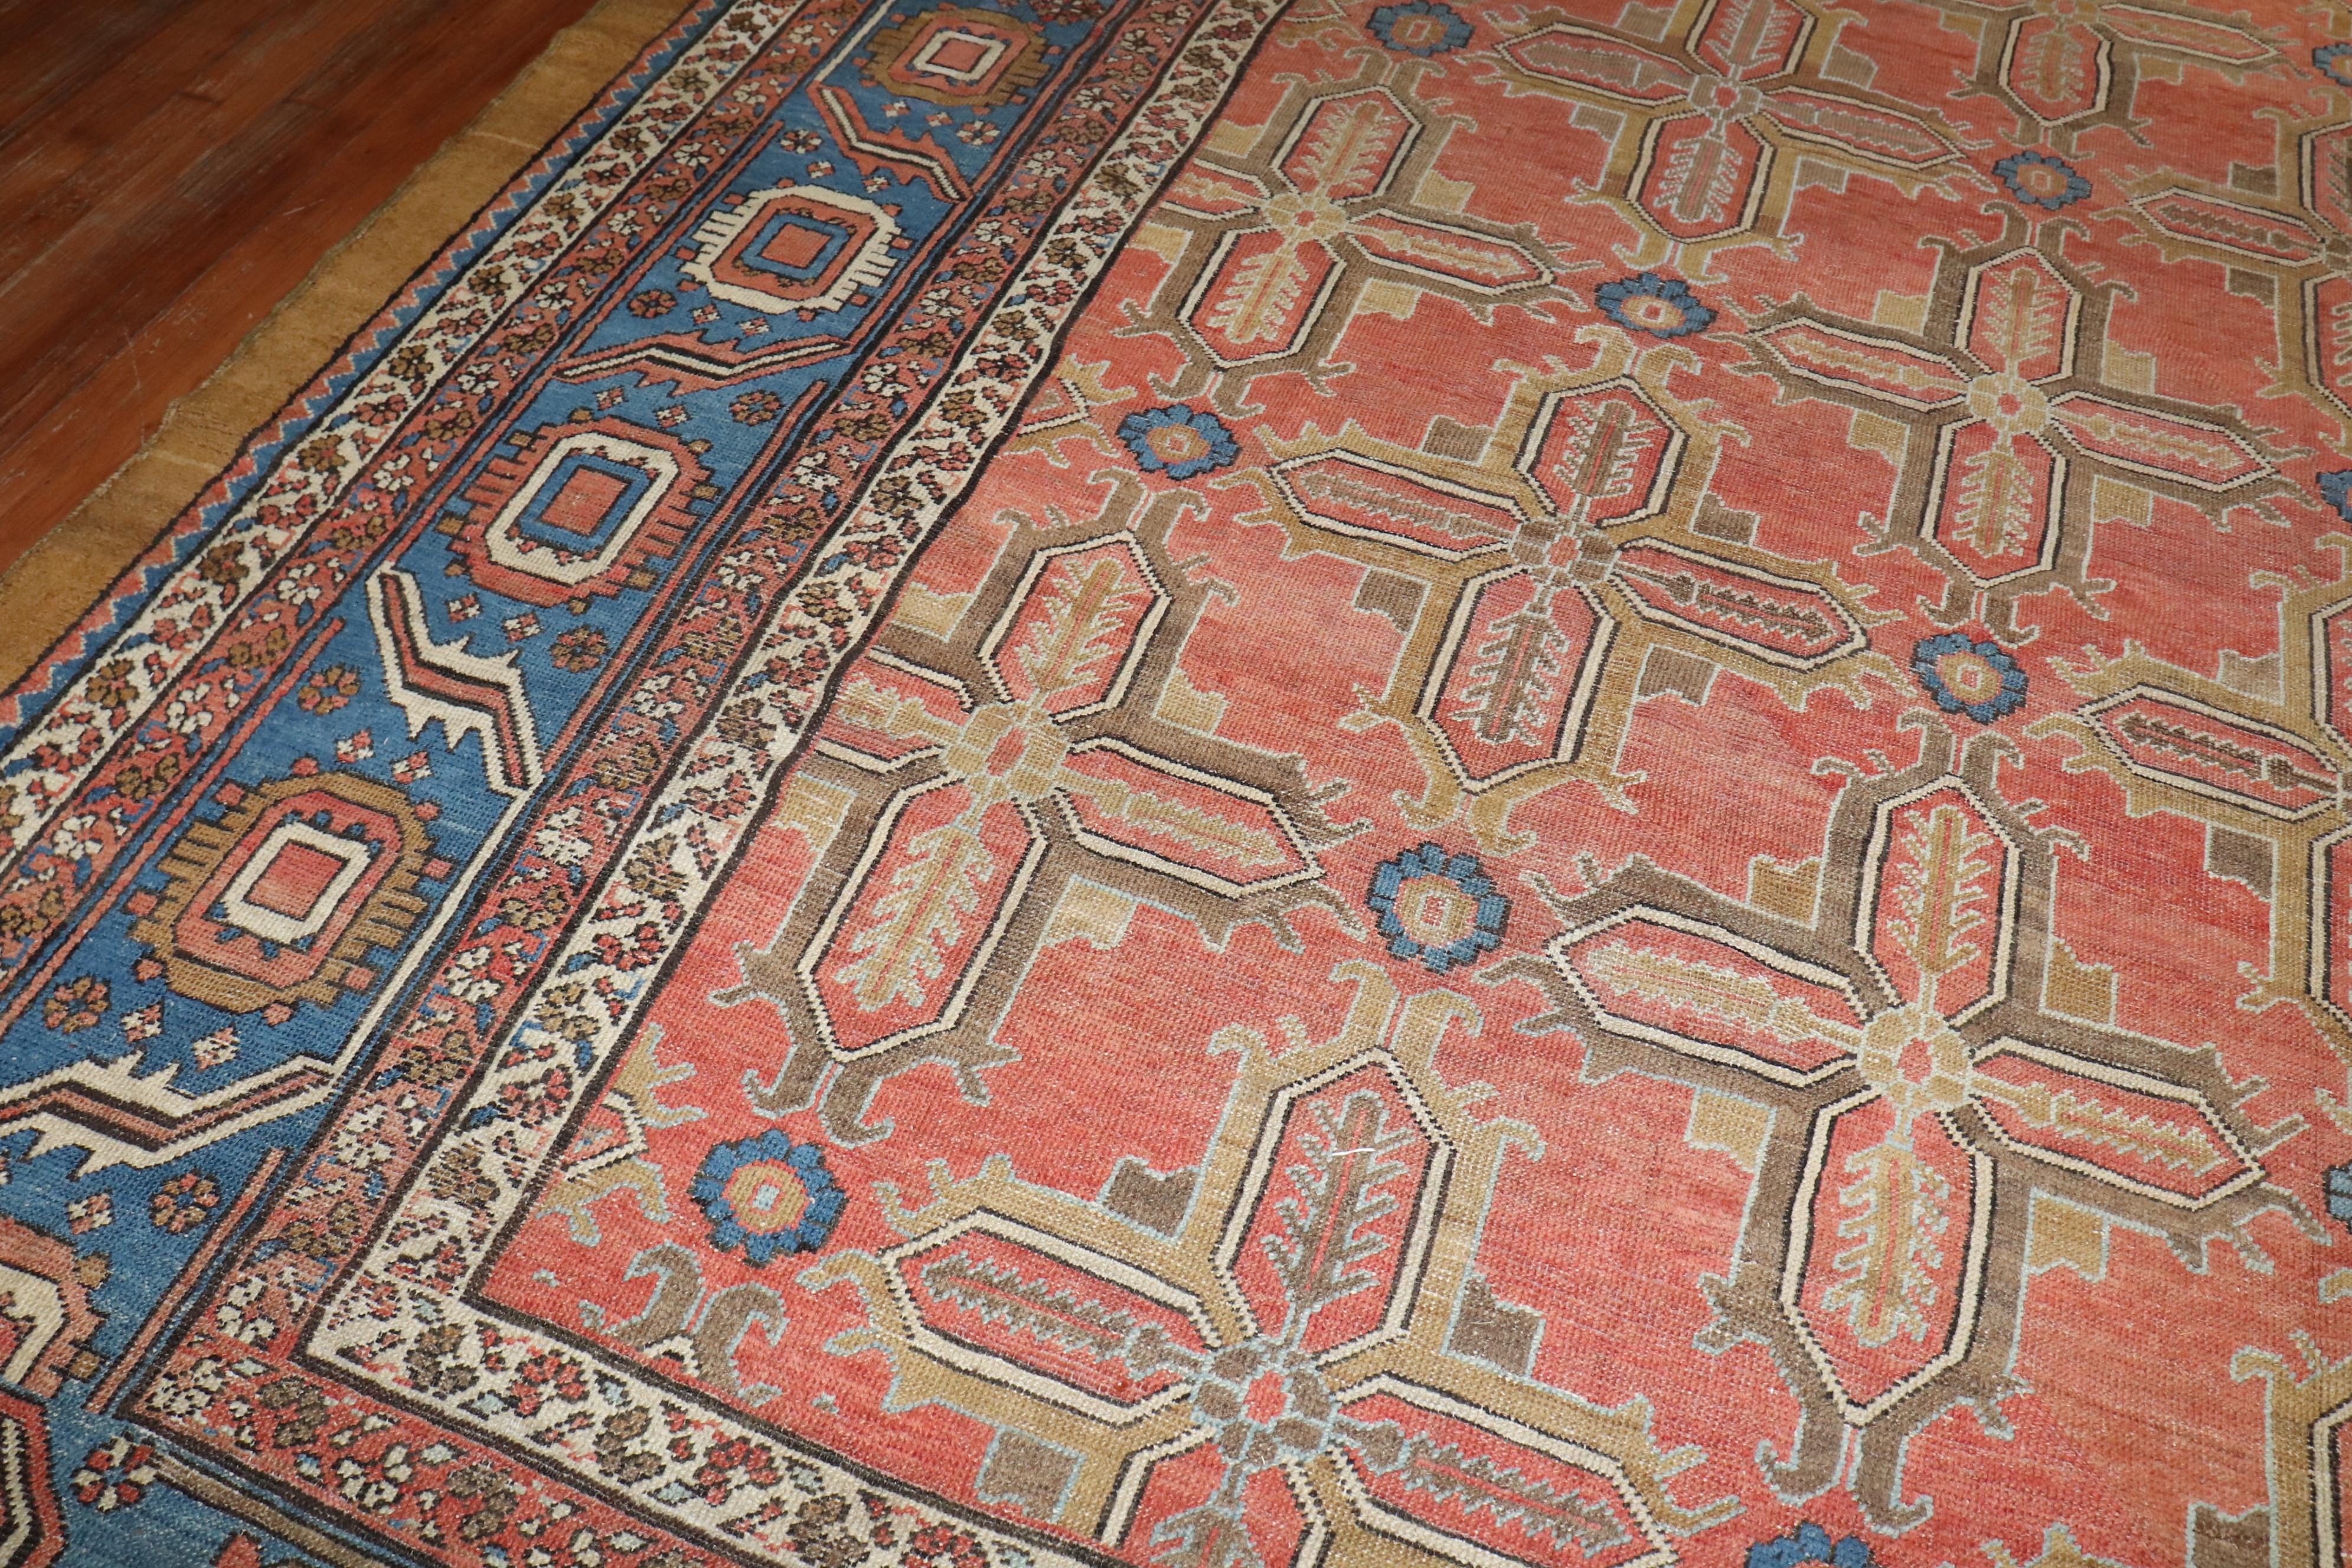 3rd quarter of the 19th century Persian Bakshaish Large Room size tribal rug

Measures: 12'4